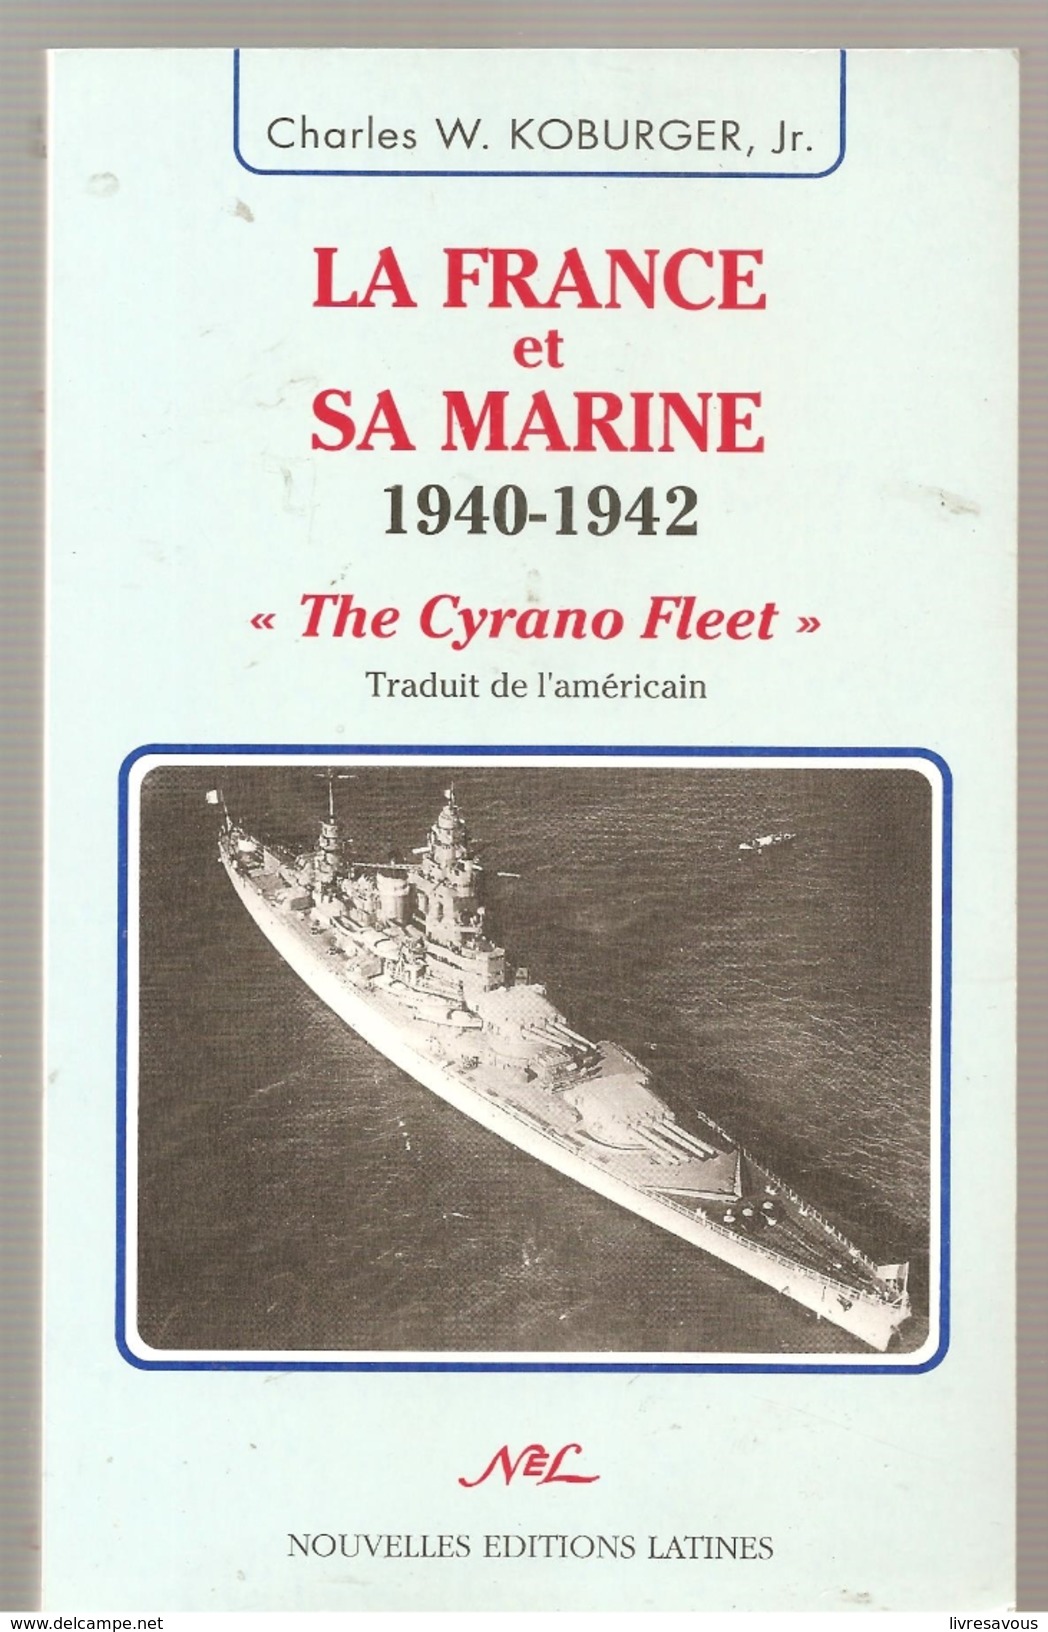 Mlitaria Marine La France Et Sa Marine 1940-1942 De Charles W. KOBURGER, Jr De Chez Nouvelles Editions Latines De 1994 - French